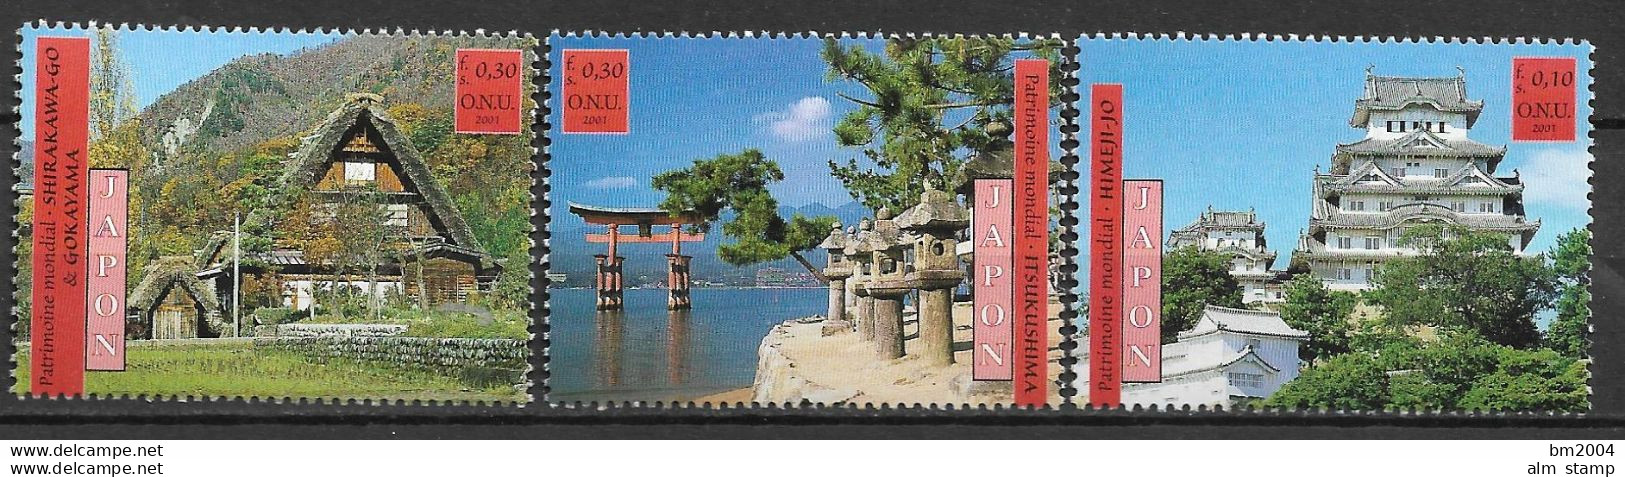 2001 UNO  Genf   Mi. 417-422 **MNH  UNESCO-Welterbe: Japan - Unused Stamps